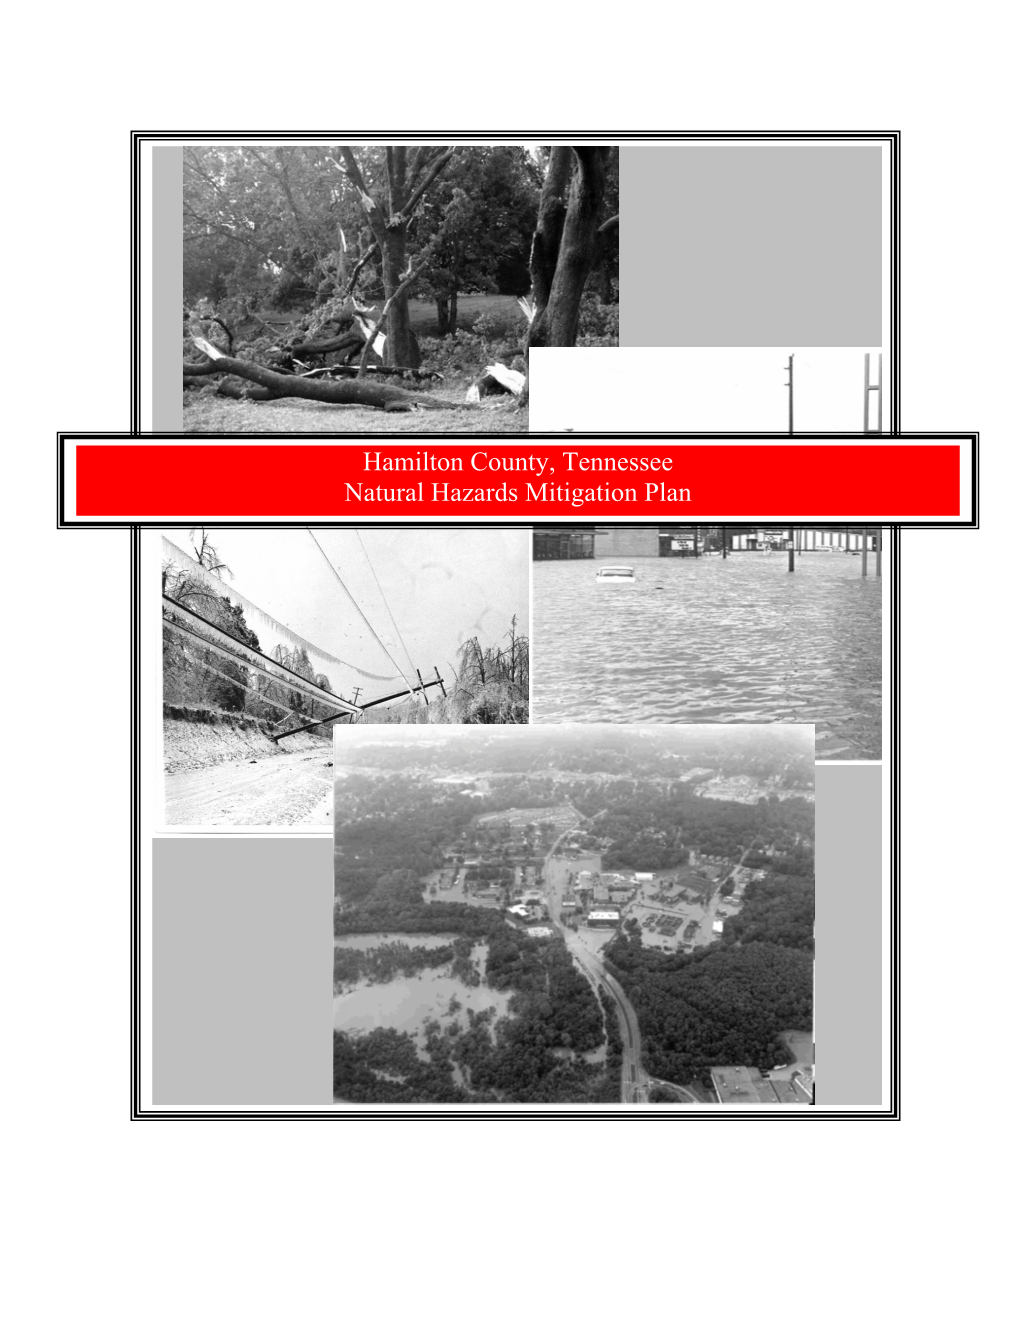 Hamilton County, Tennessee Natural Hazards Mitigation Plan